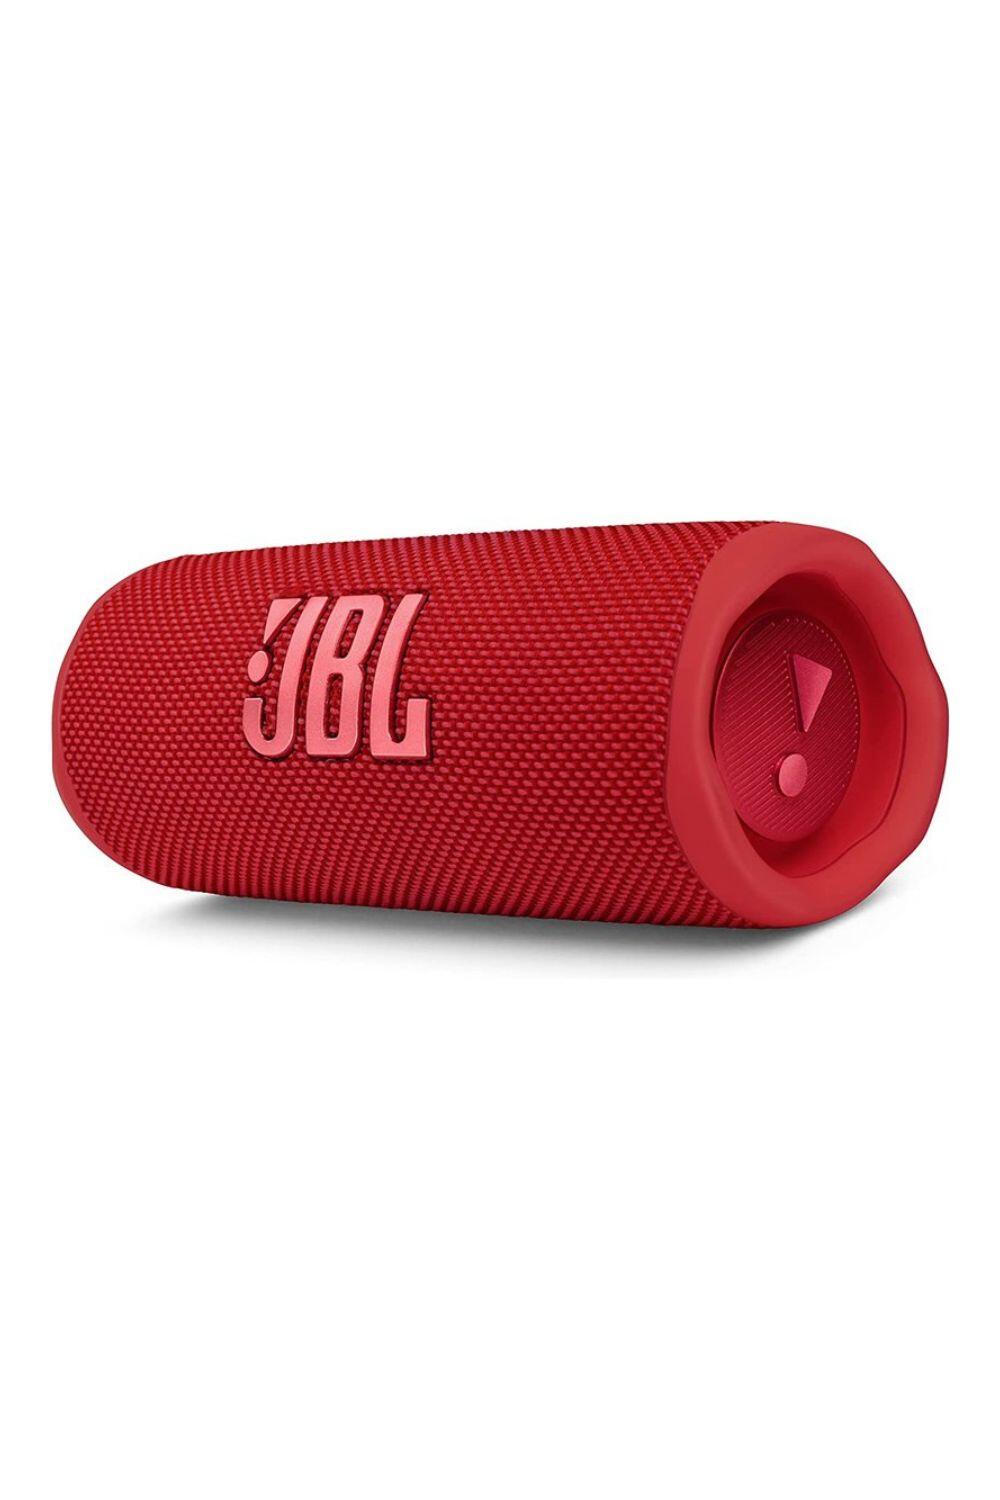 JBL JBL Flip 6 Portable Waterproof and Dustproof Bluetooth Speaker